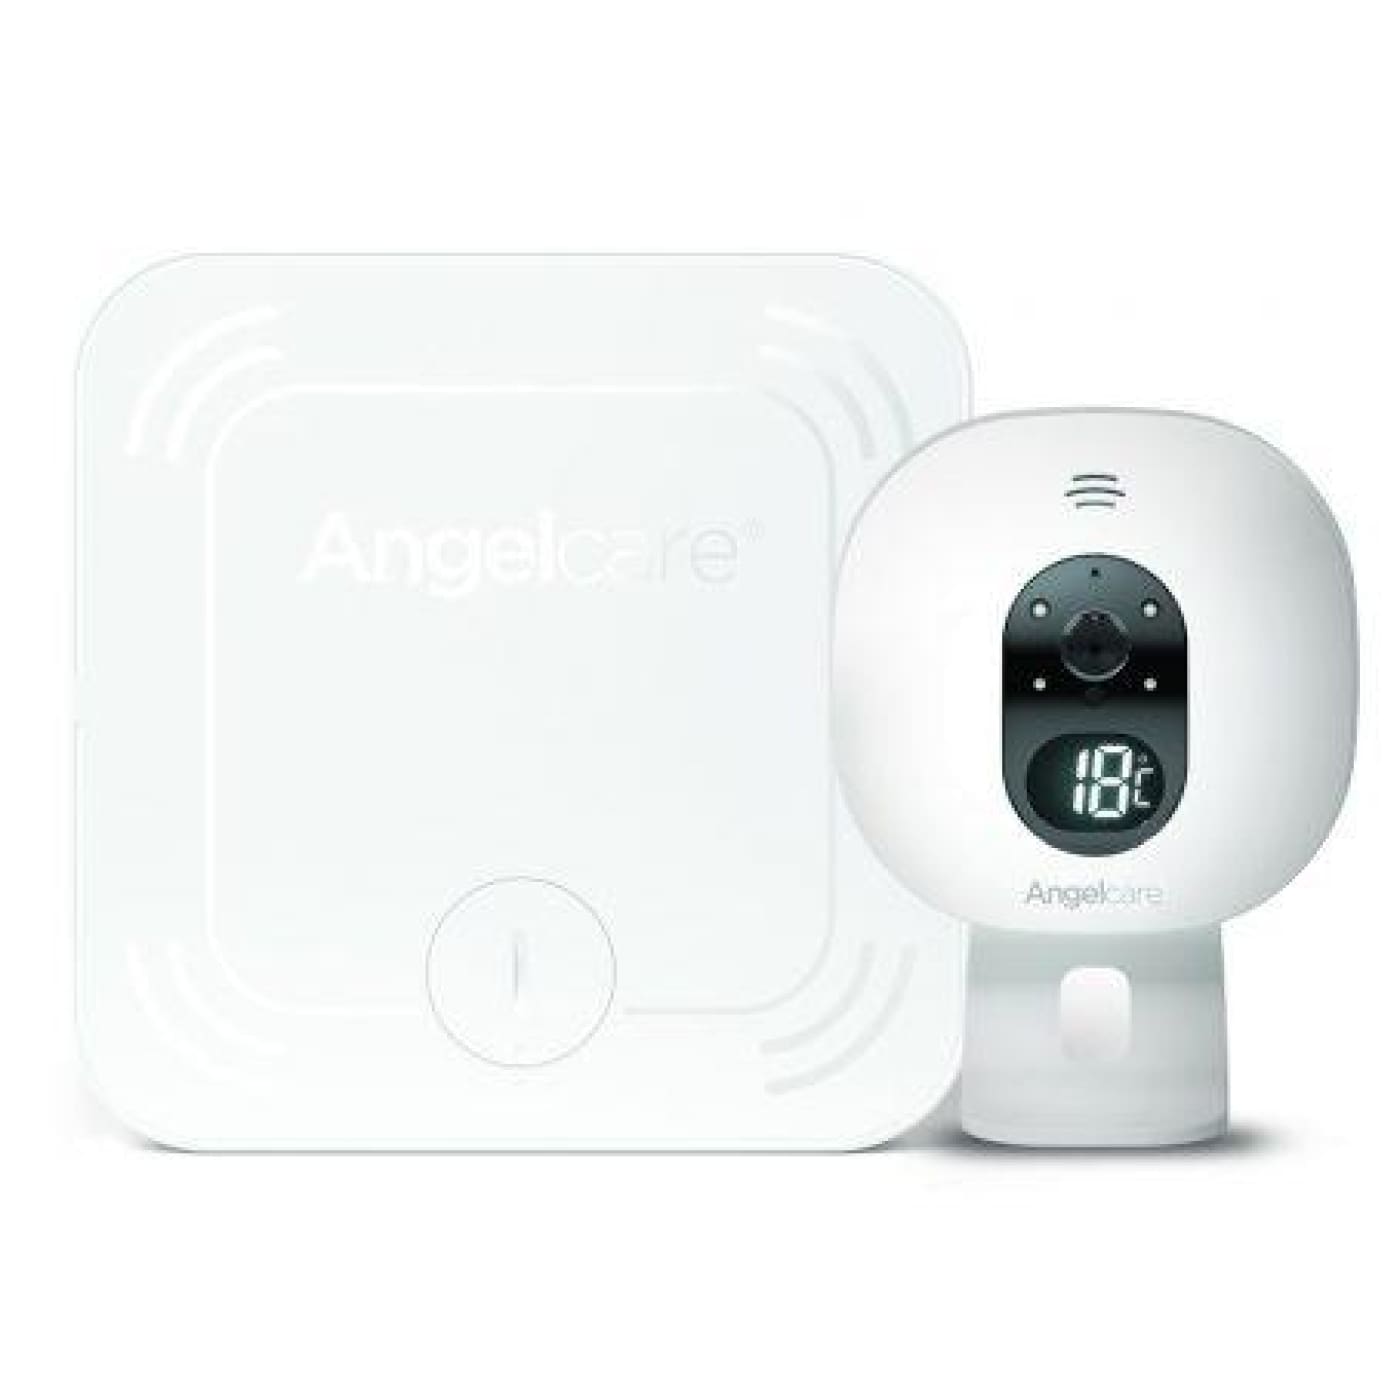 Angelcare Additional Camera & SensAsure Sensore Pad for AC527/AC327/AC320 - HEALTH & HOME SAFETY - BABY MONITORS